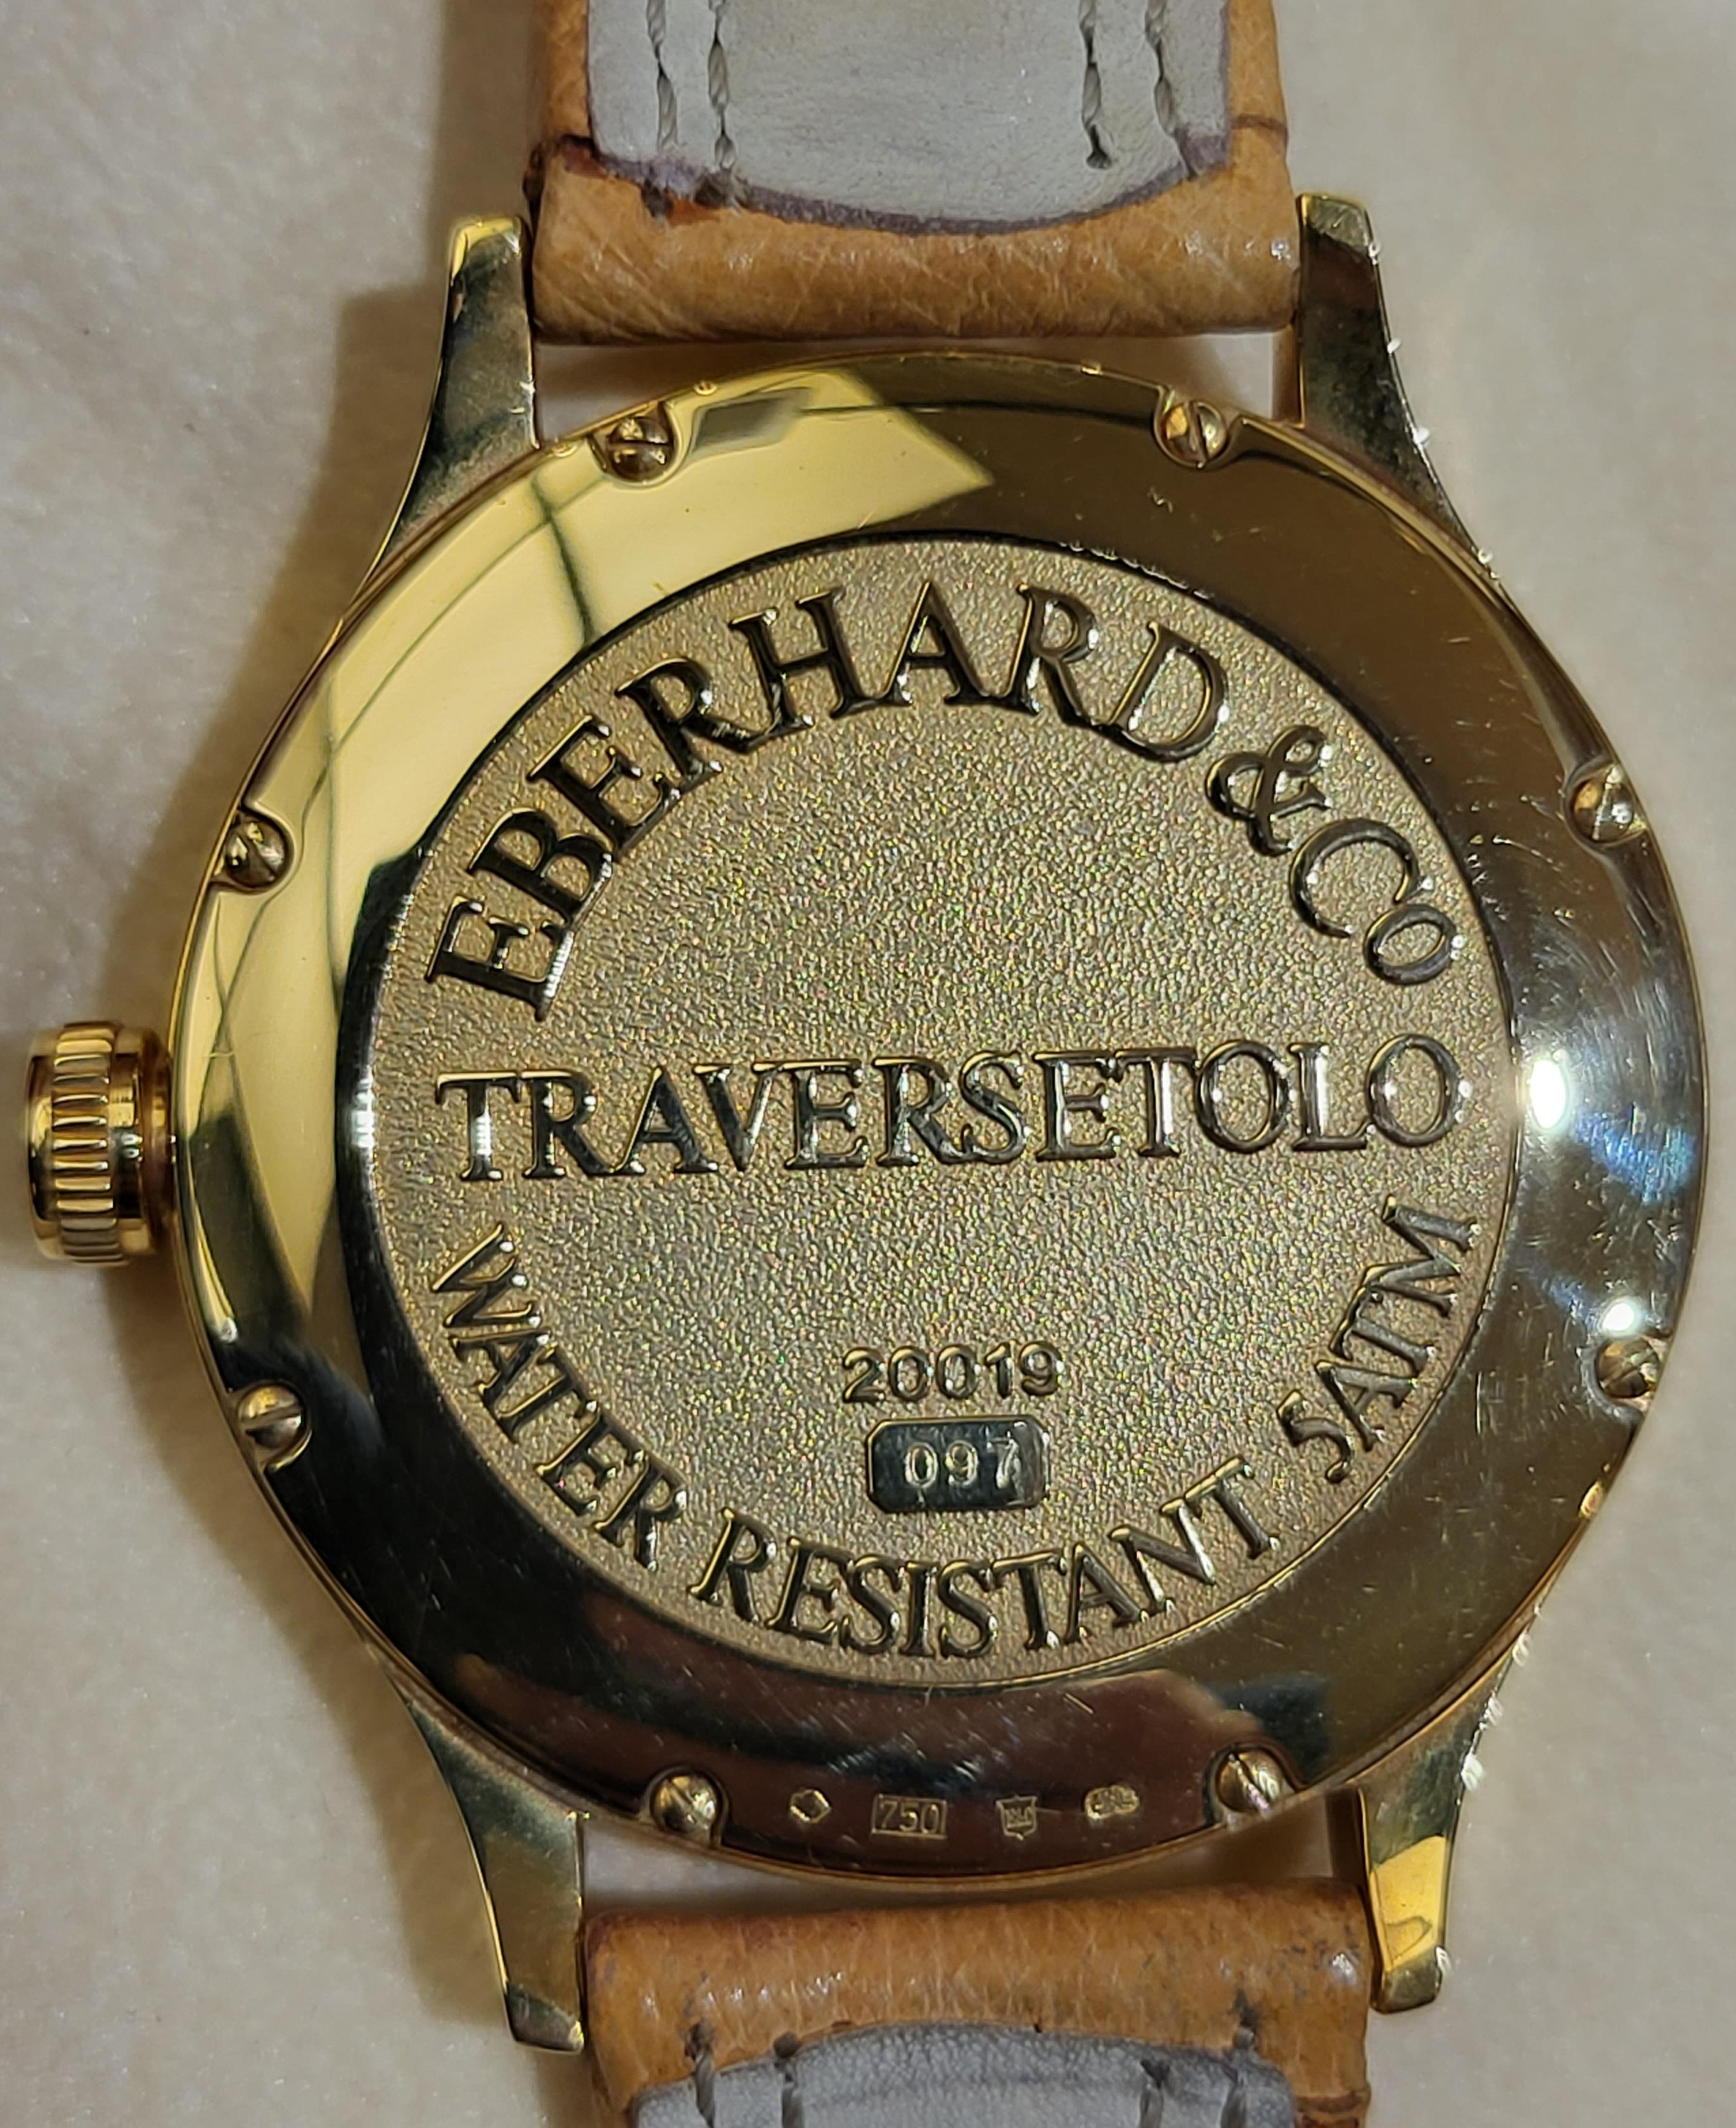 Eberhard Traversetolo, Mechanisme Et Tradition, Diameter 42mm, Mechanical Movem. 6